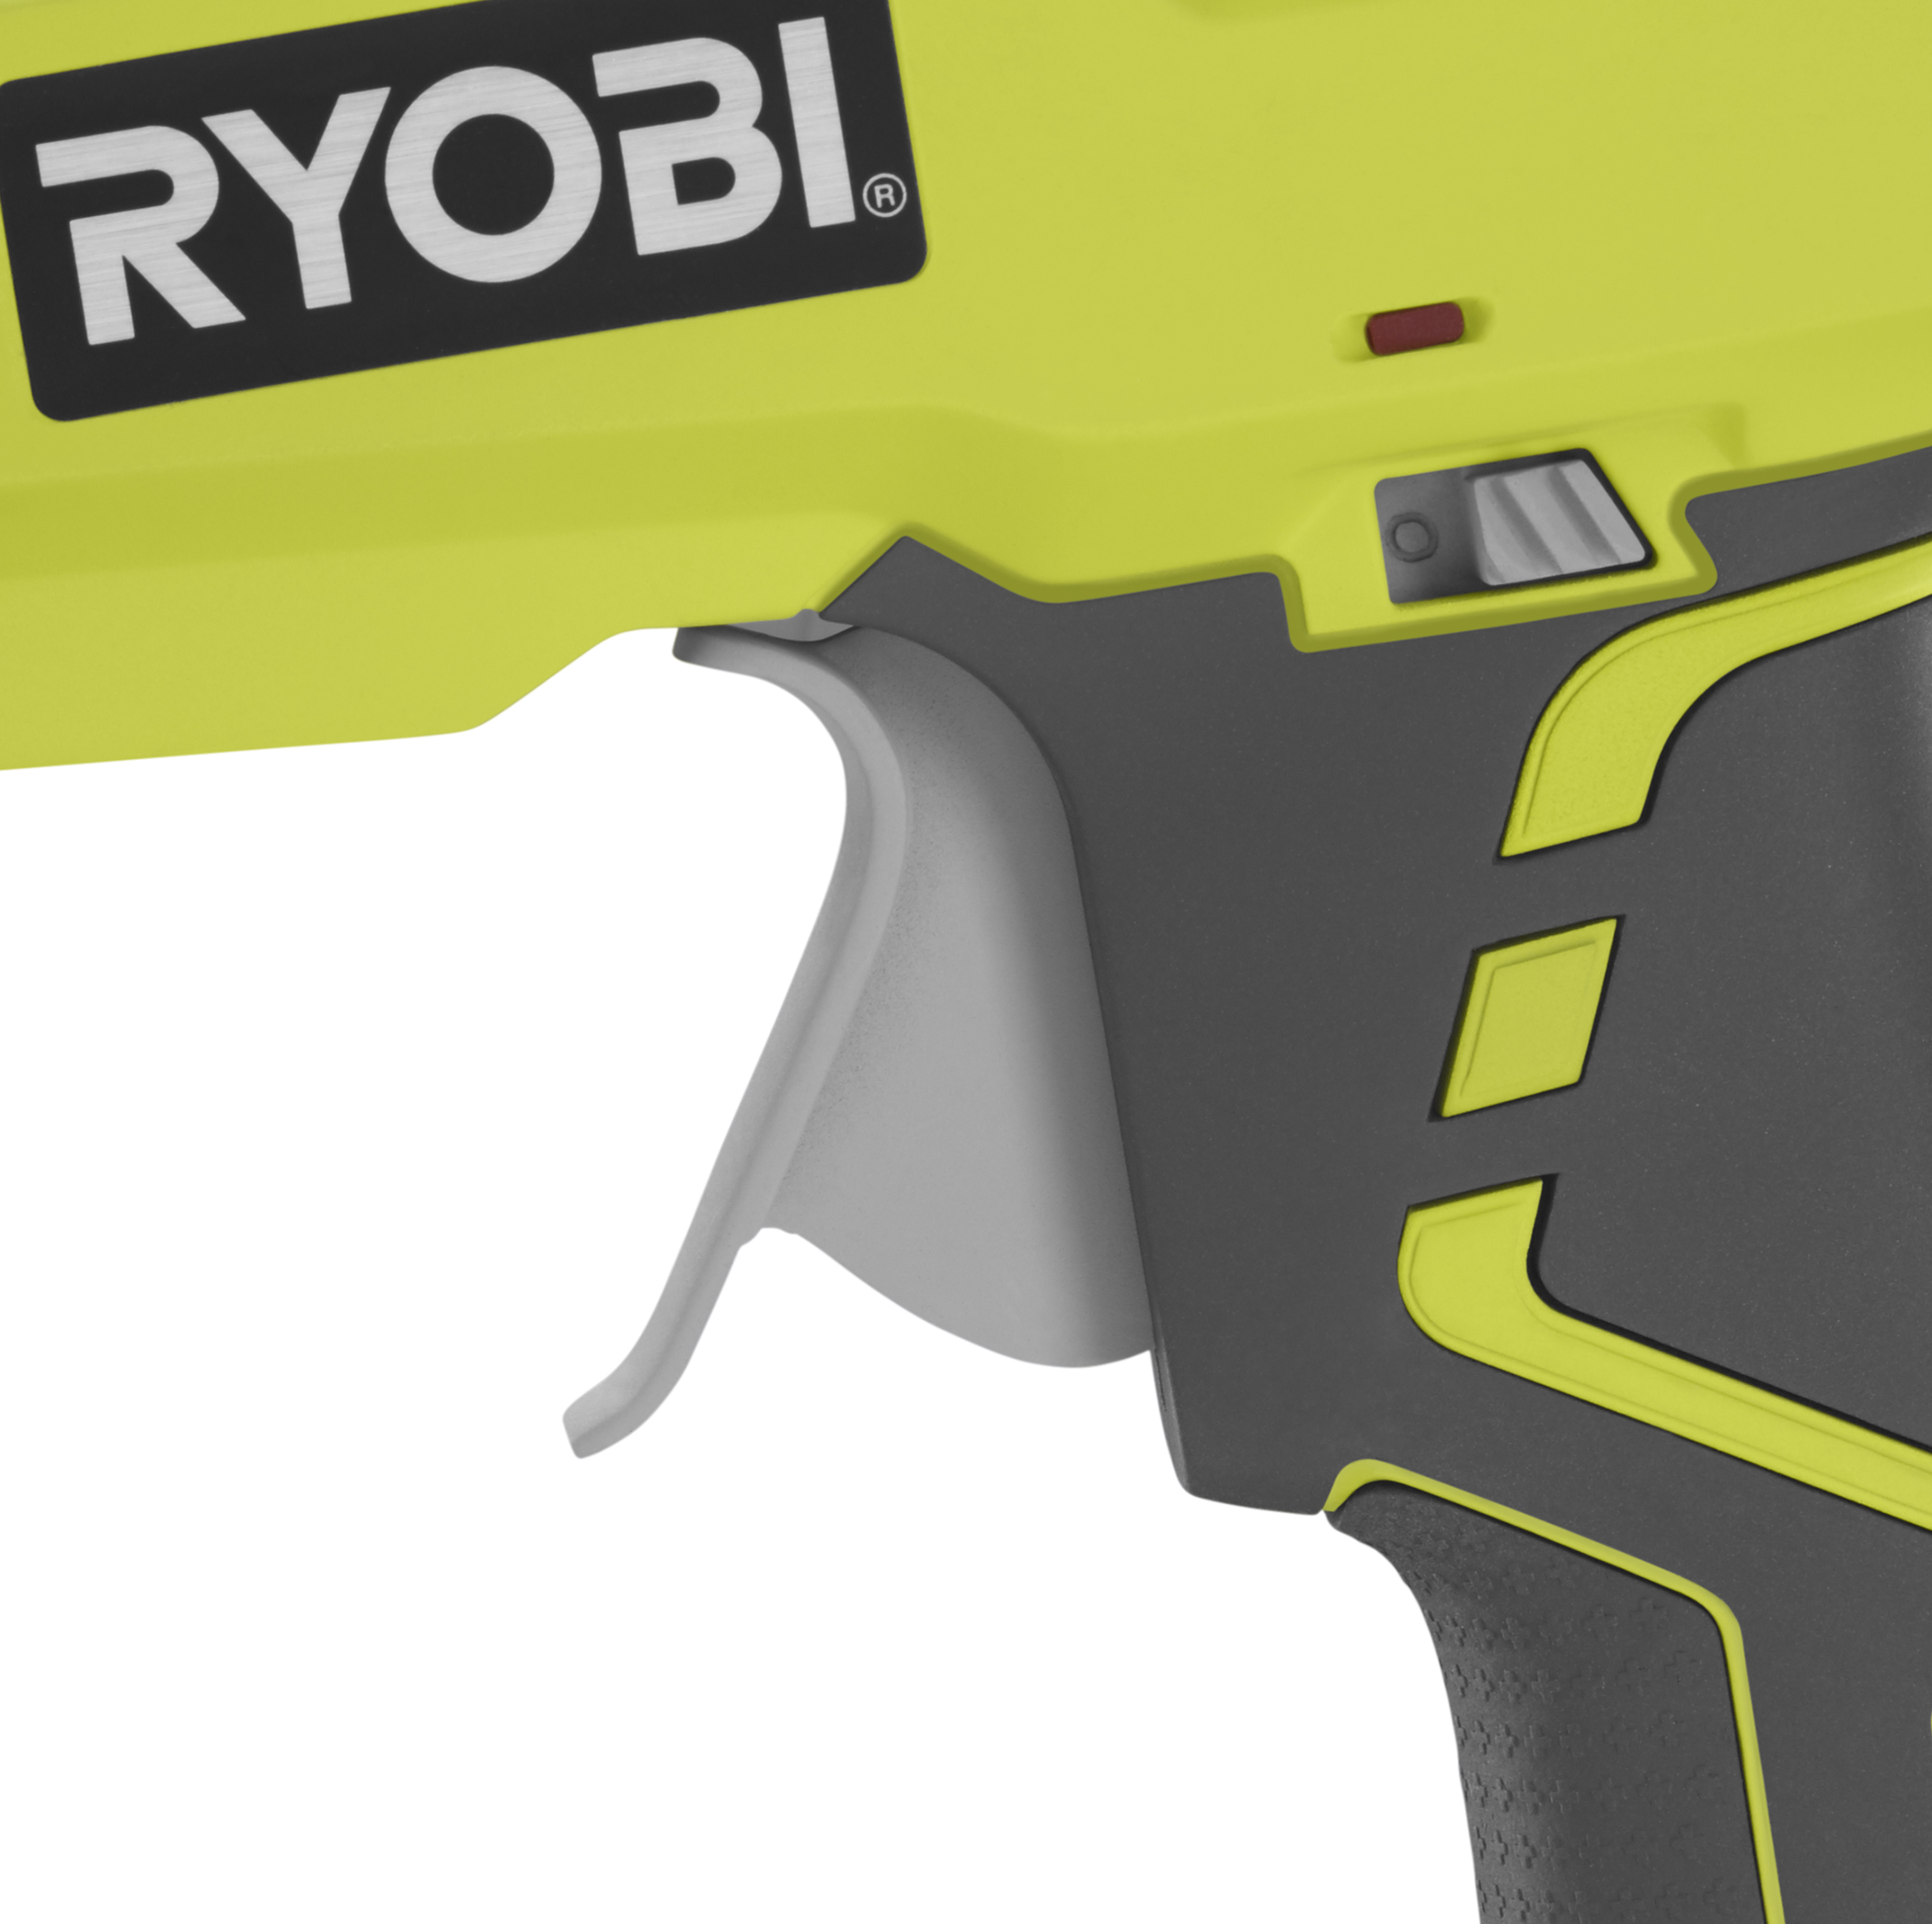 Ryobi 18-Volt One+ Glue Gun